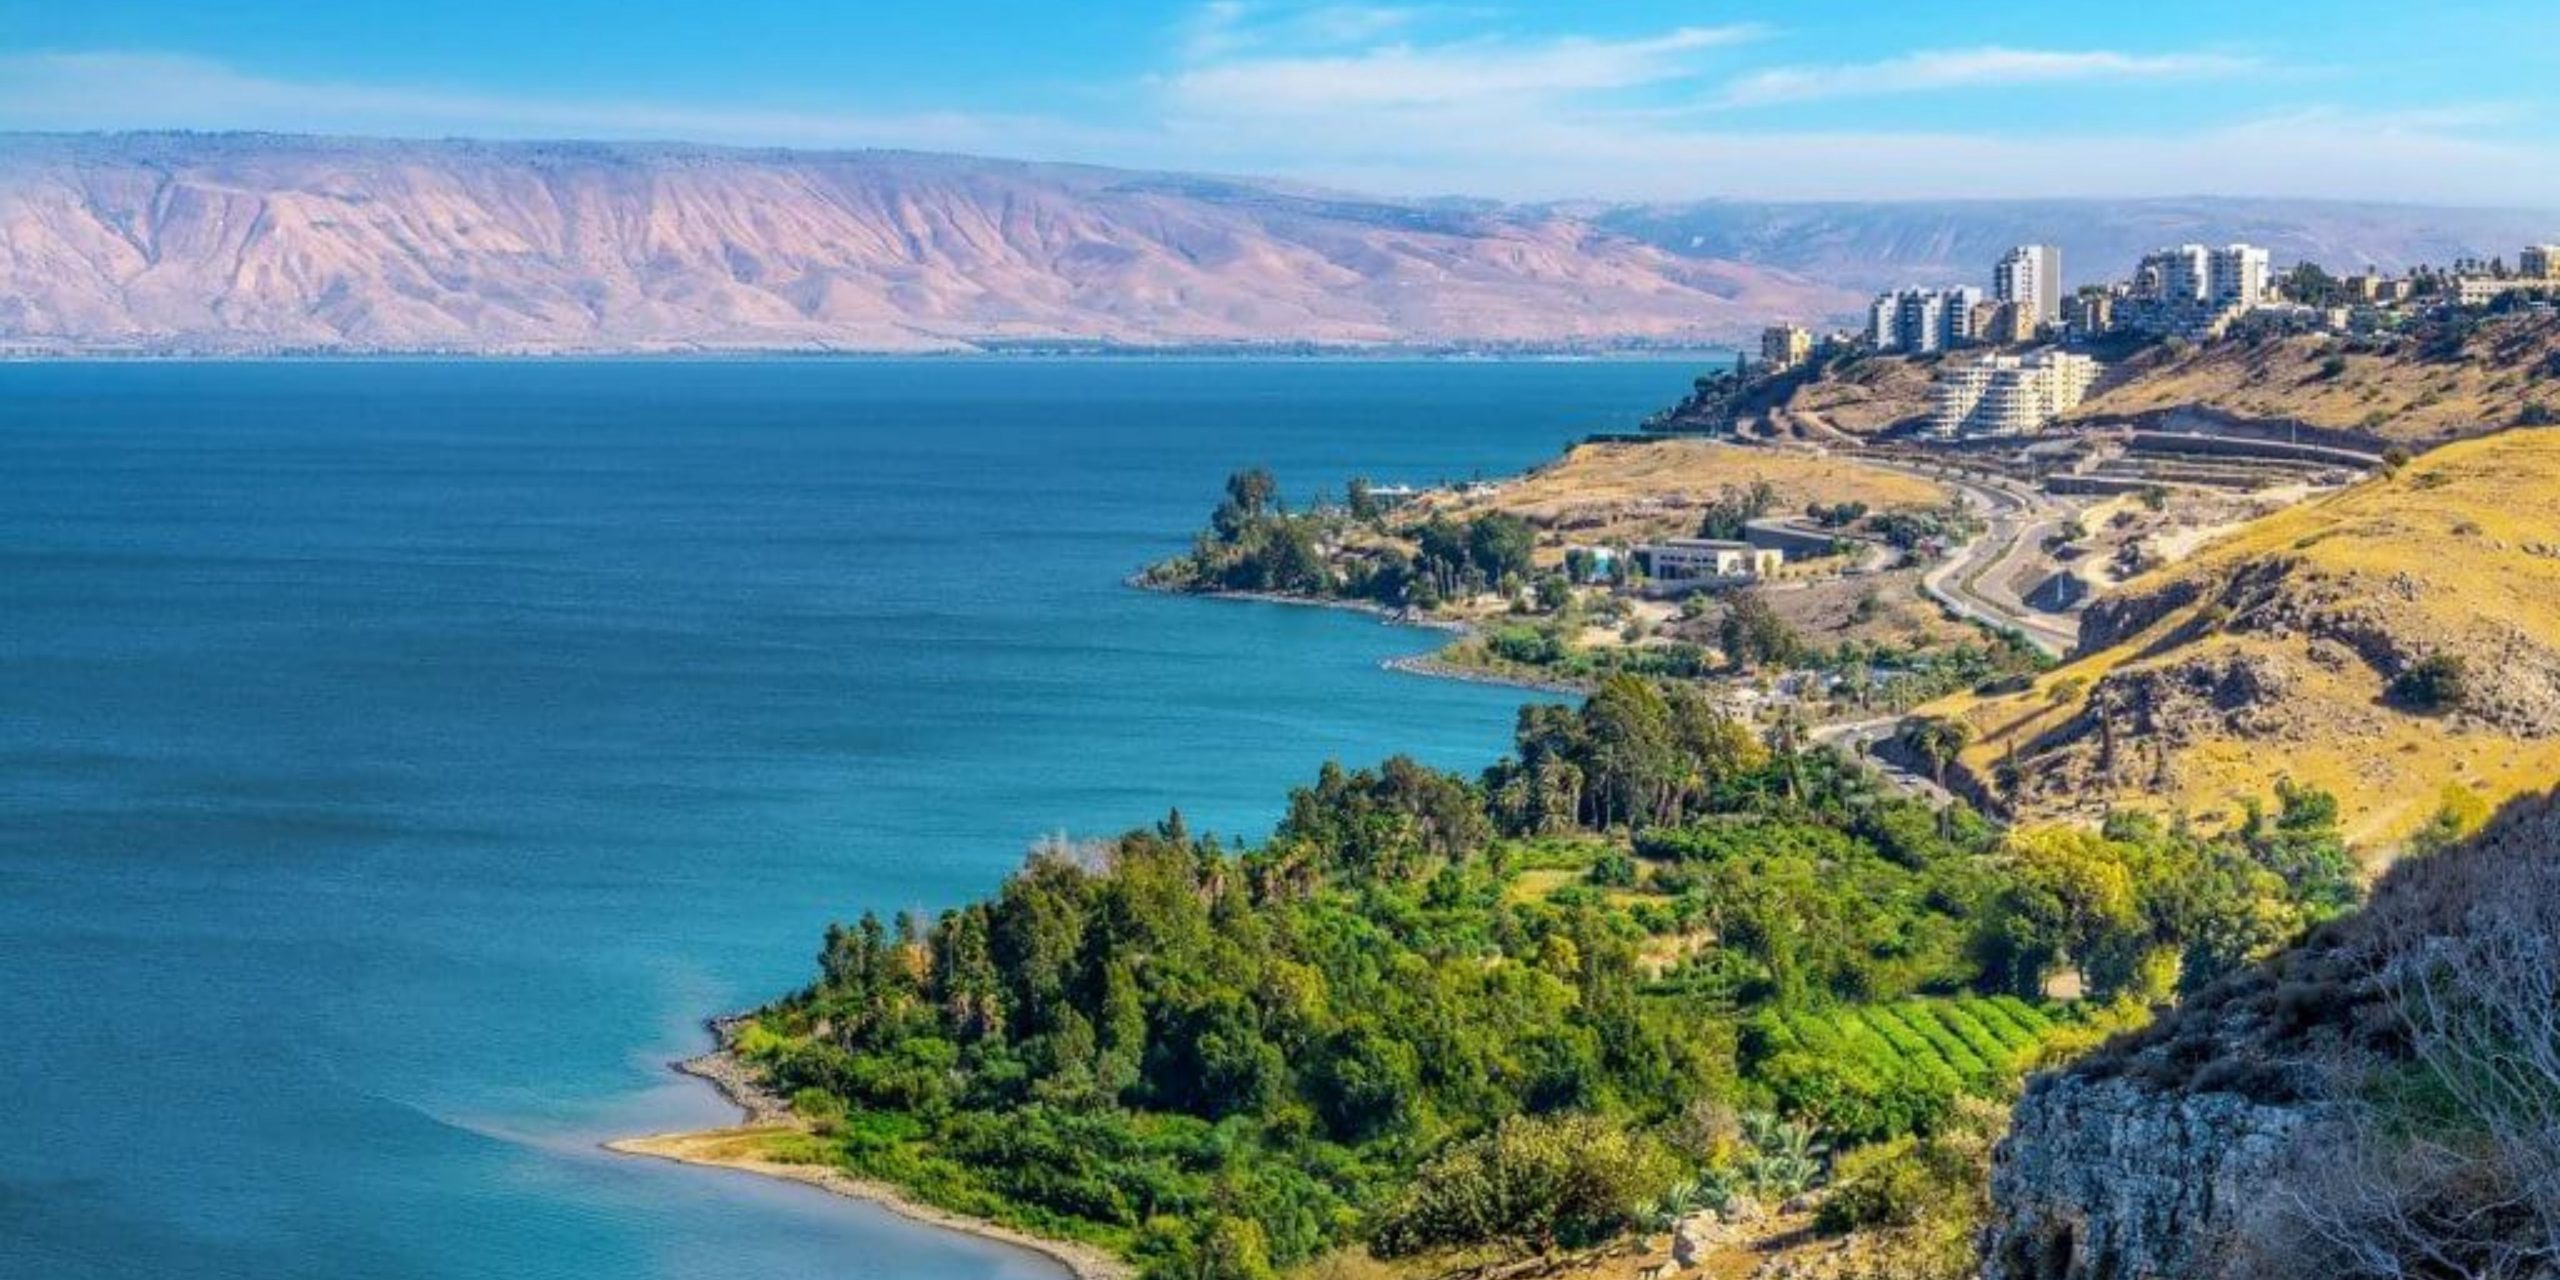 Israel Summer Destination - Tiberias